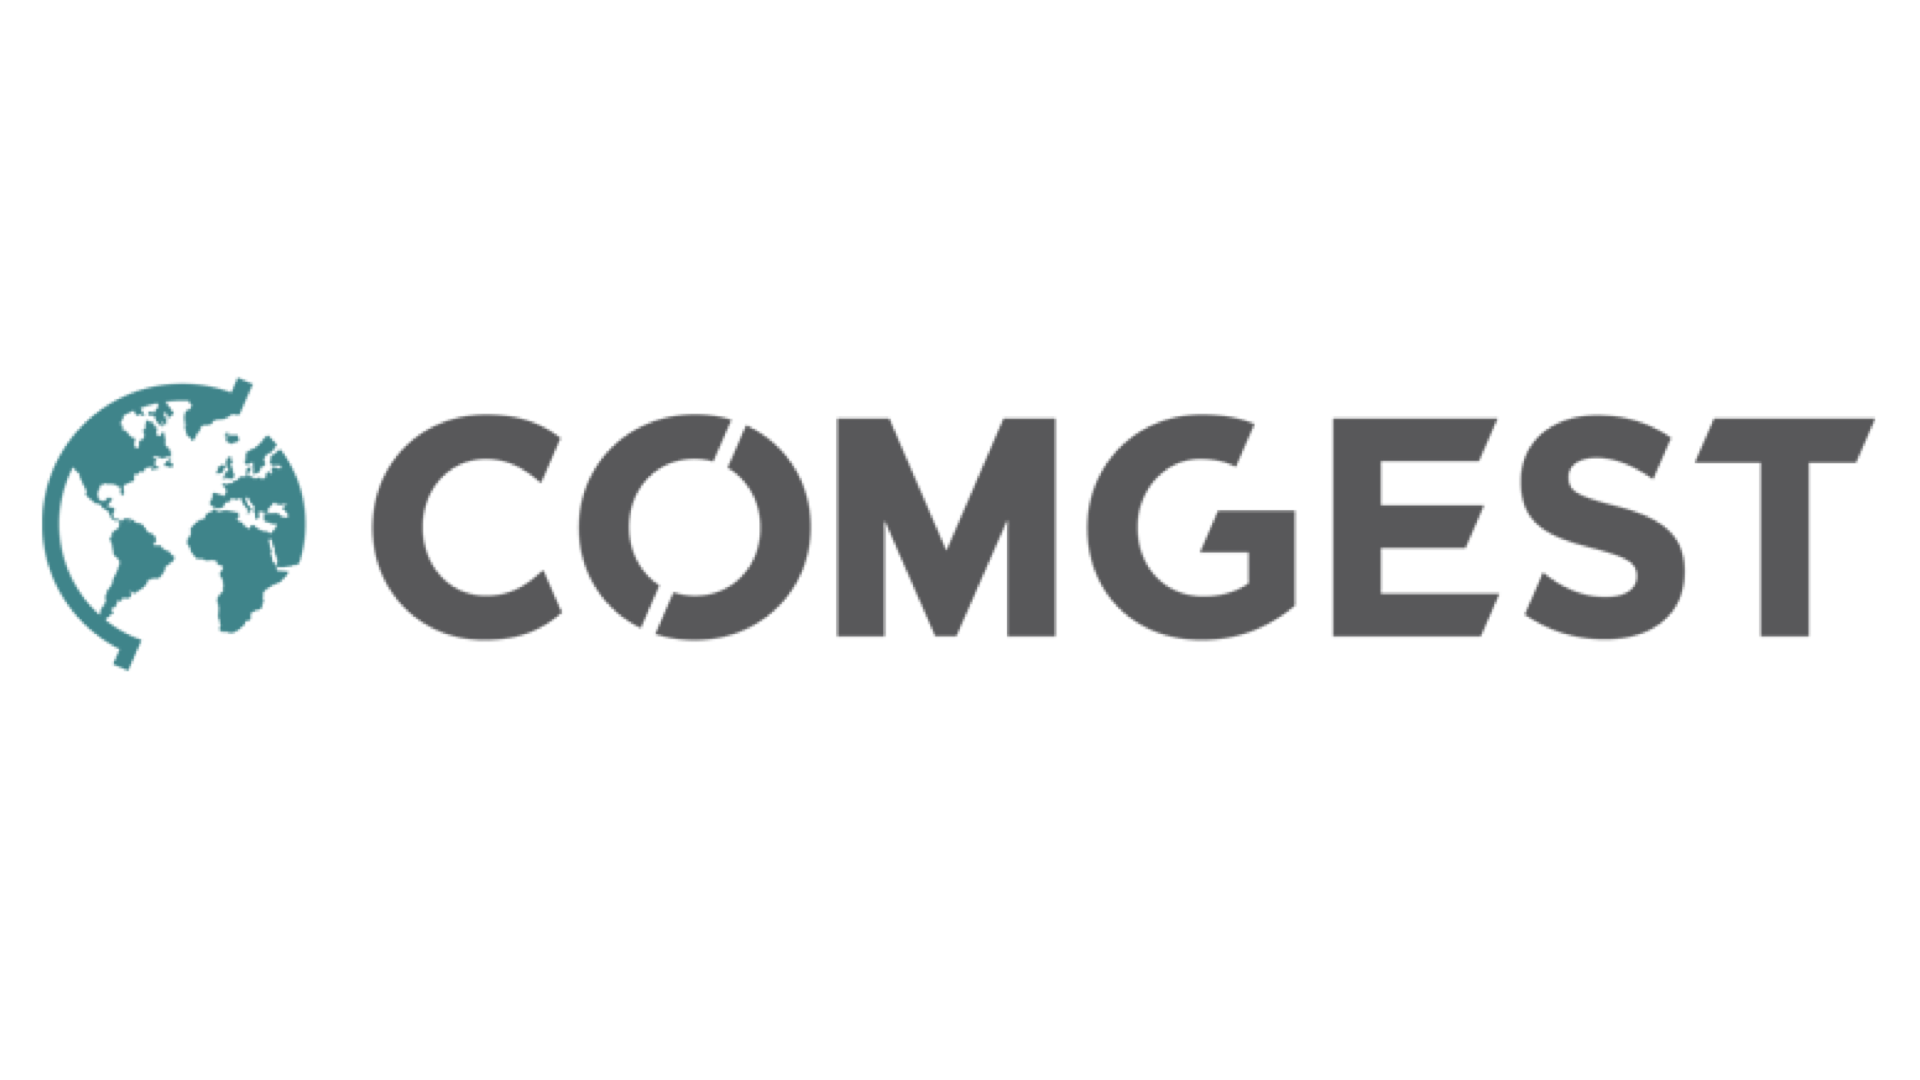 Comgest